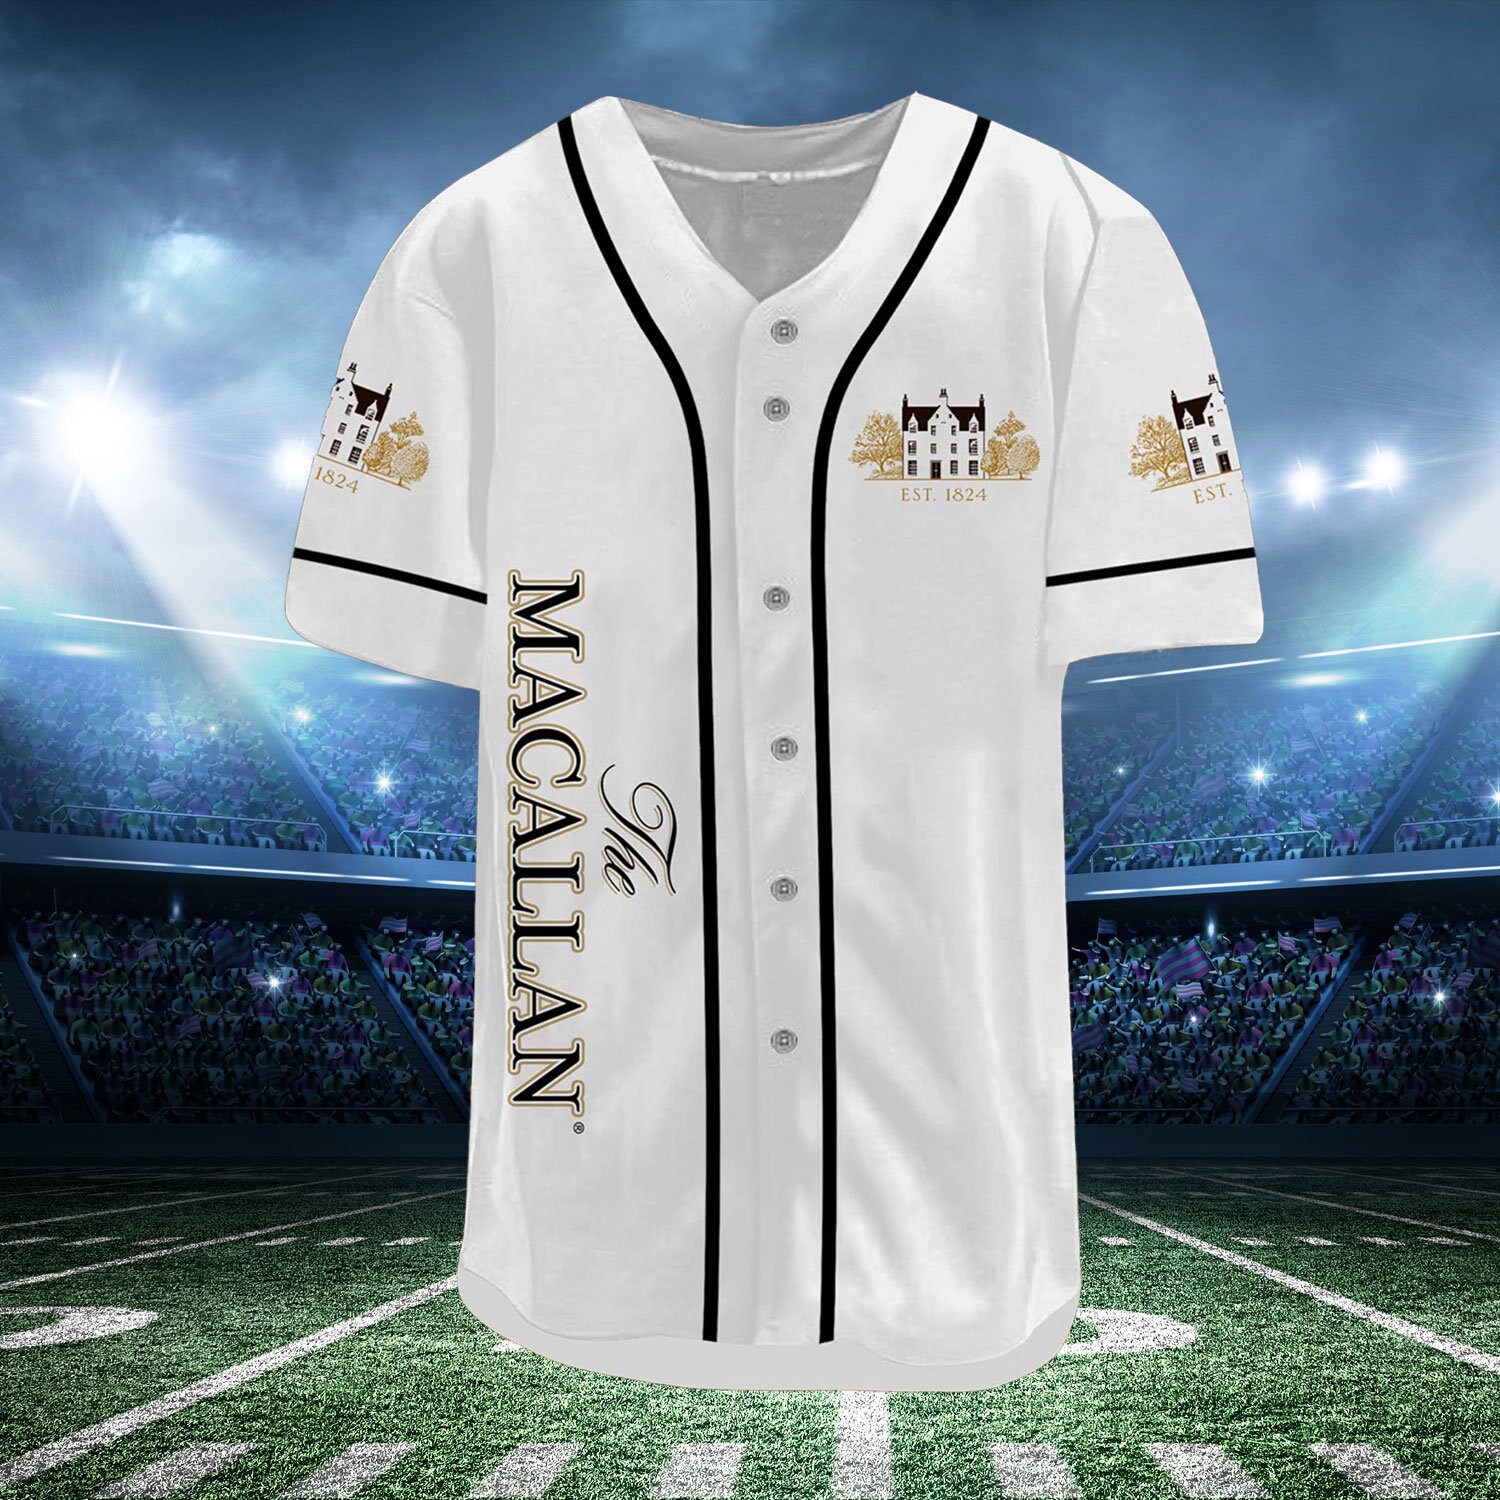 The Macallan White Baseball Jersey